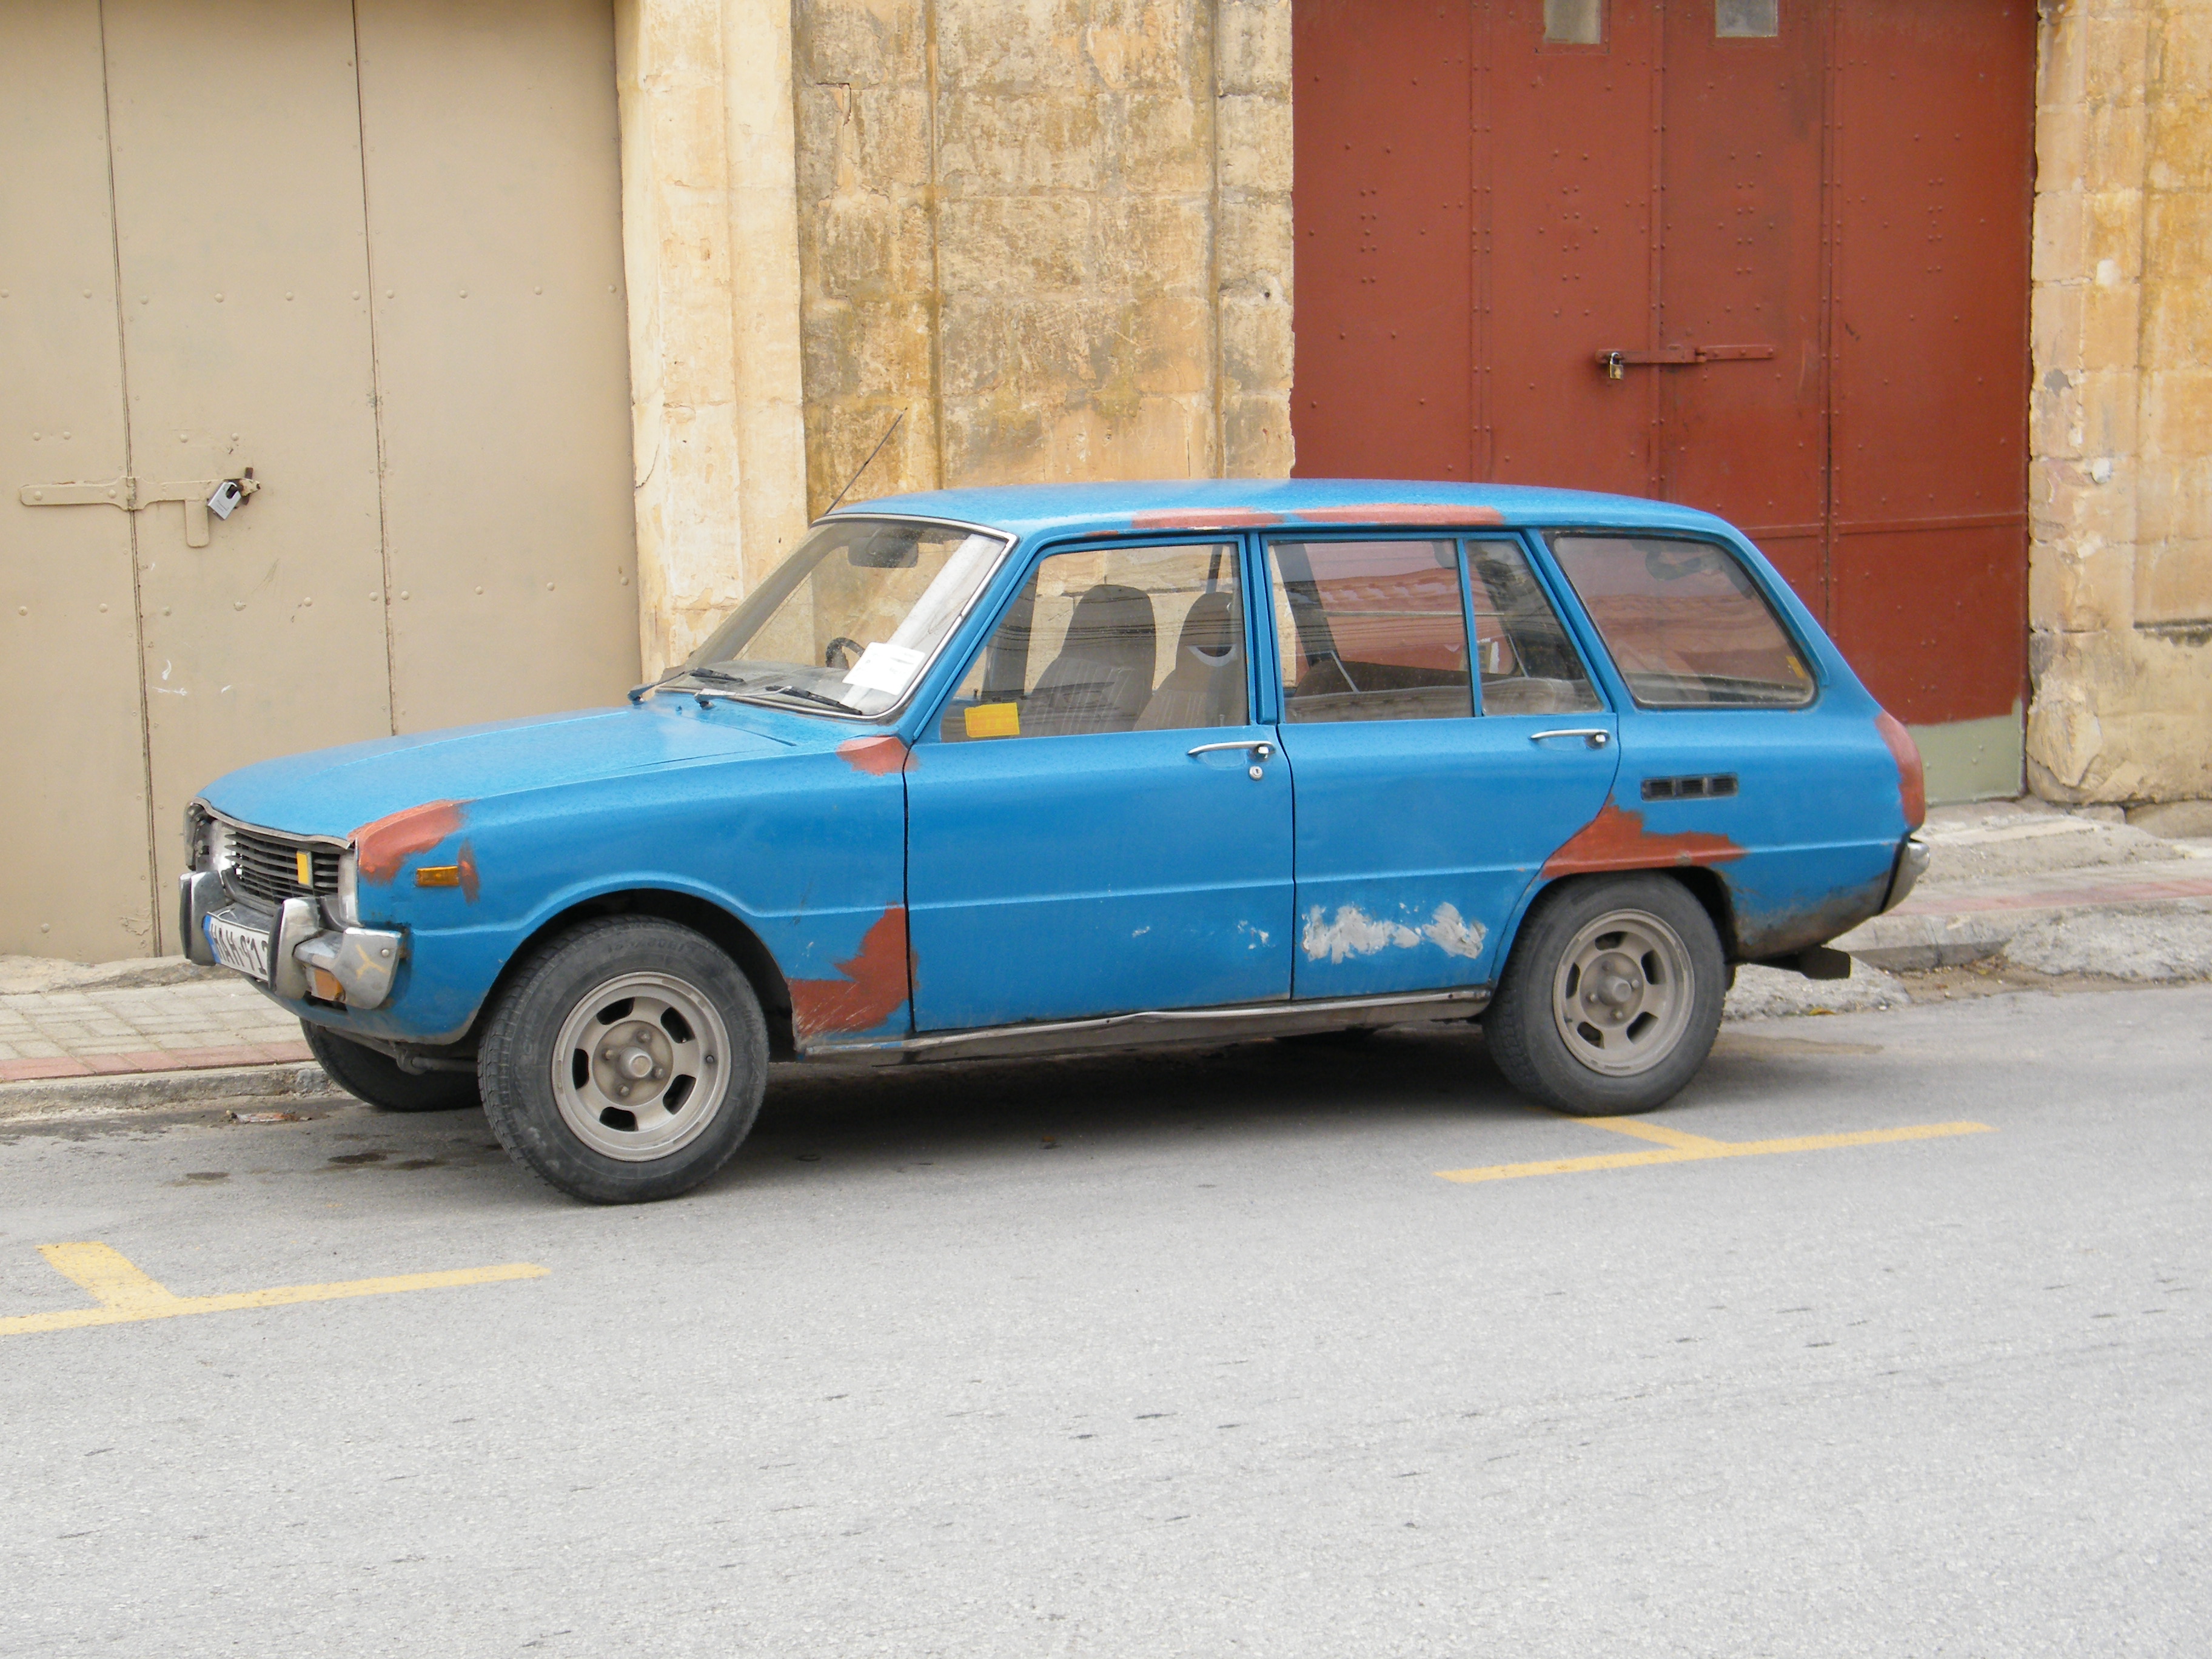 Malta 2012 - Mazda 1300 Estate | Flickr - Photo Sharing!